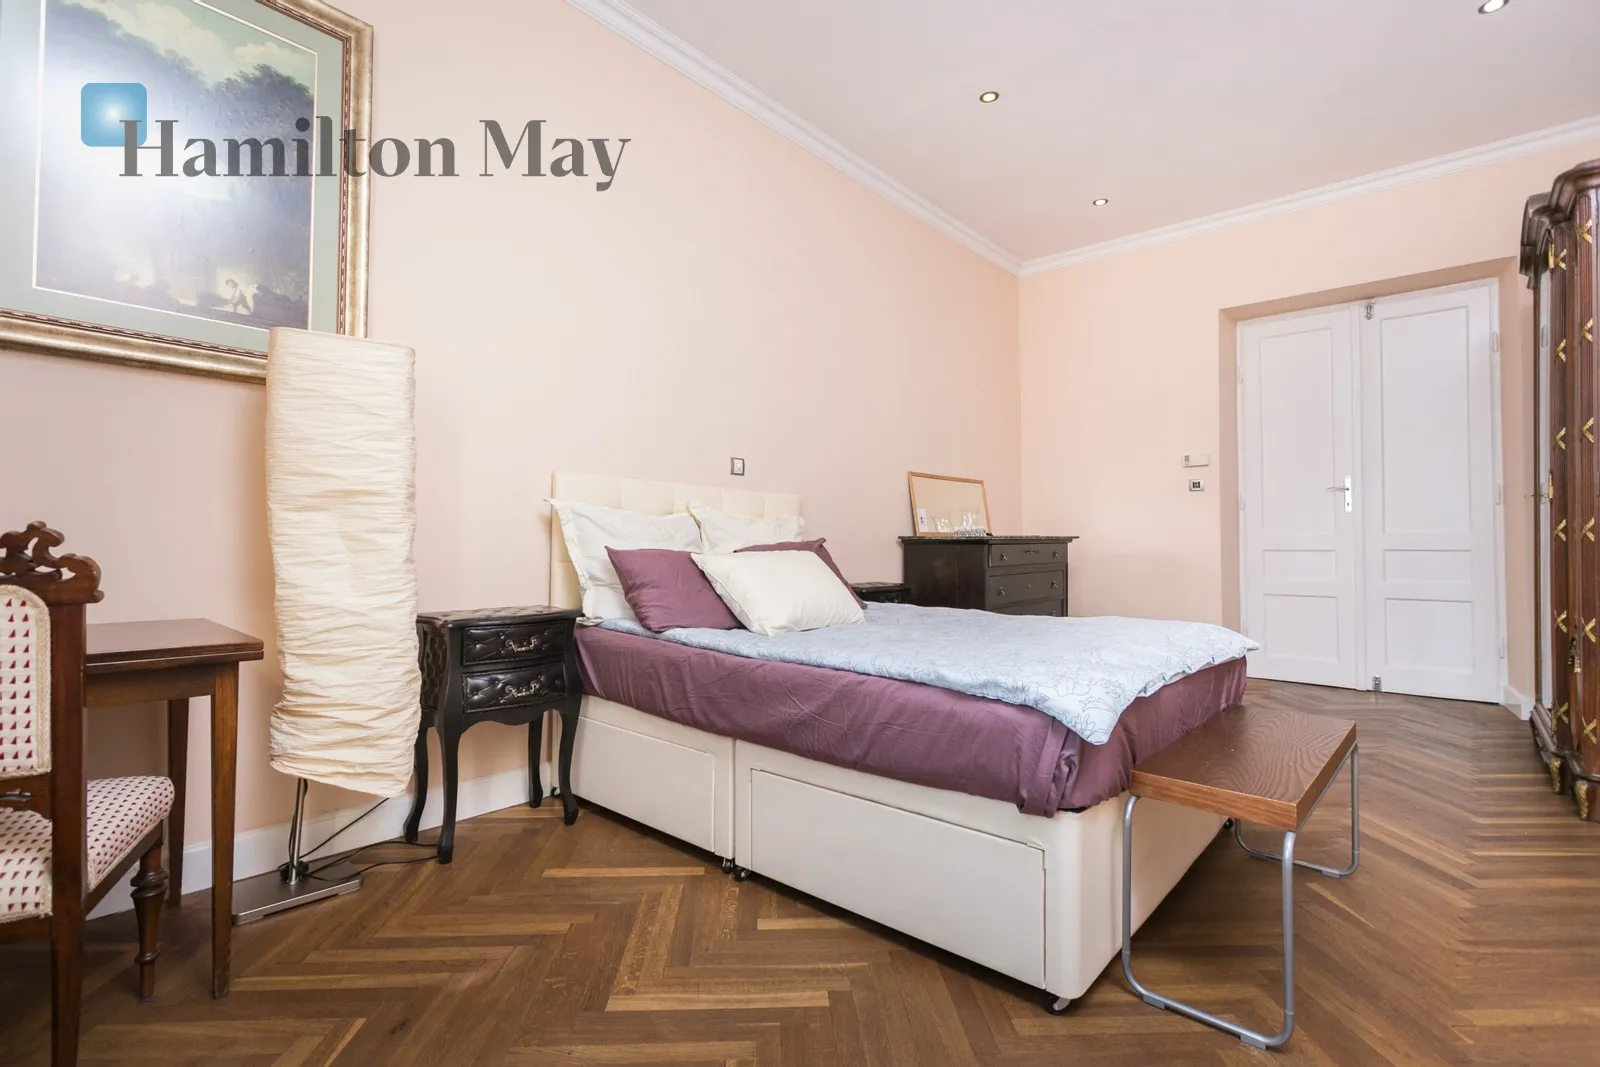 Region: Stare Miasto Level: 3 Price: 3500 PLN Bedrooms: 2 Bathrooms: 2 Size: 68m2